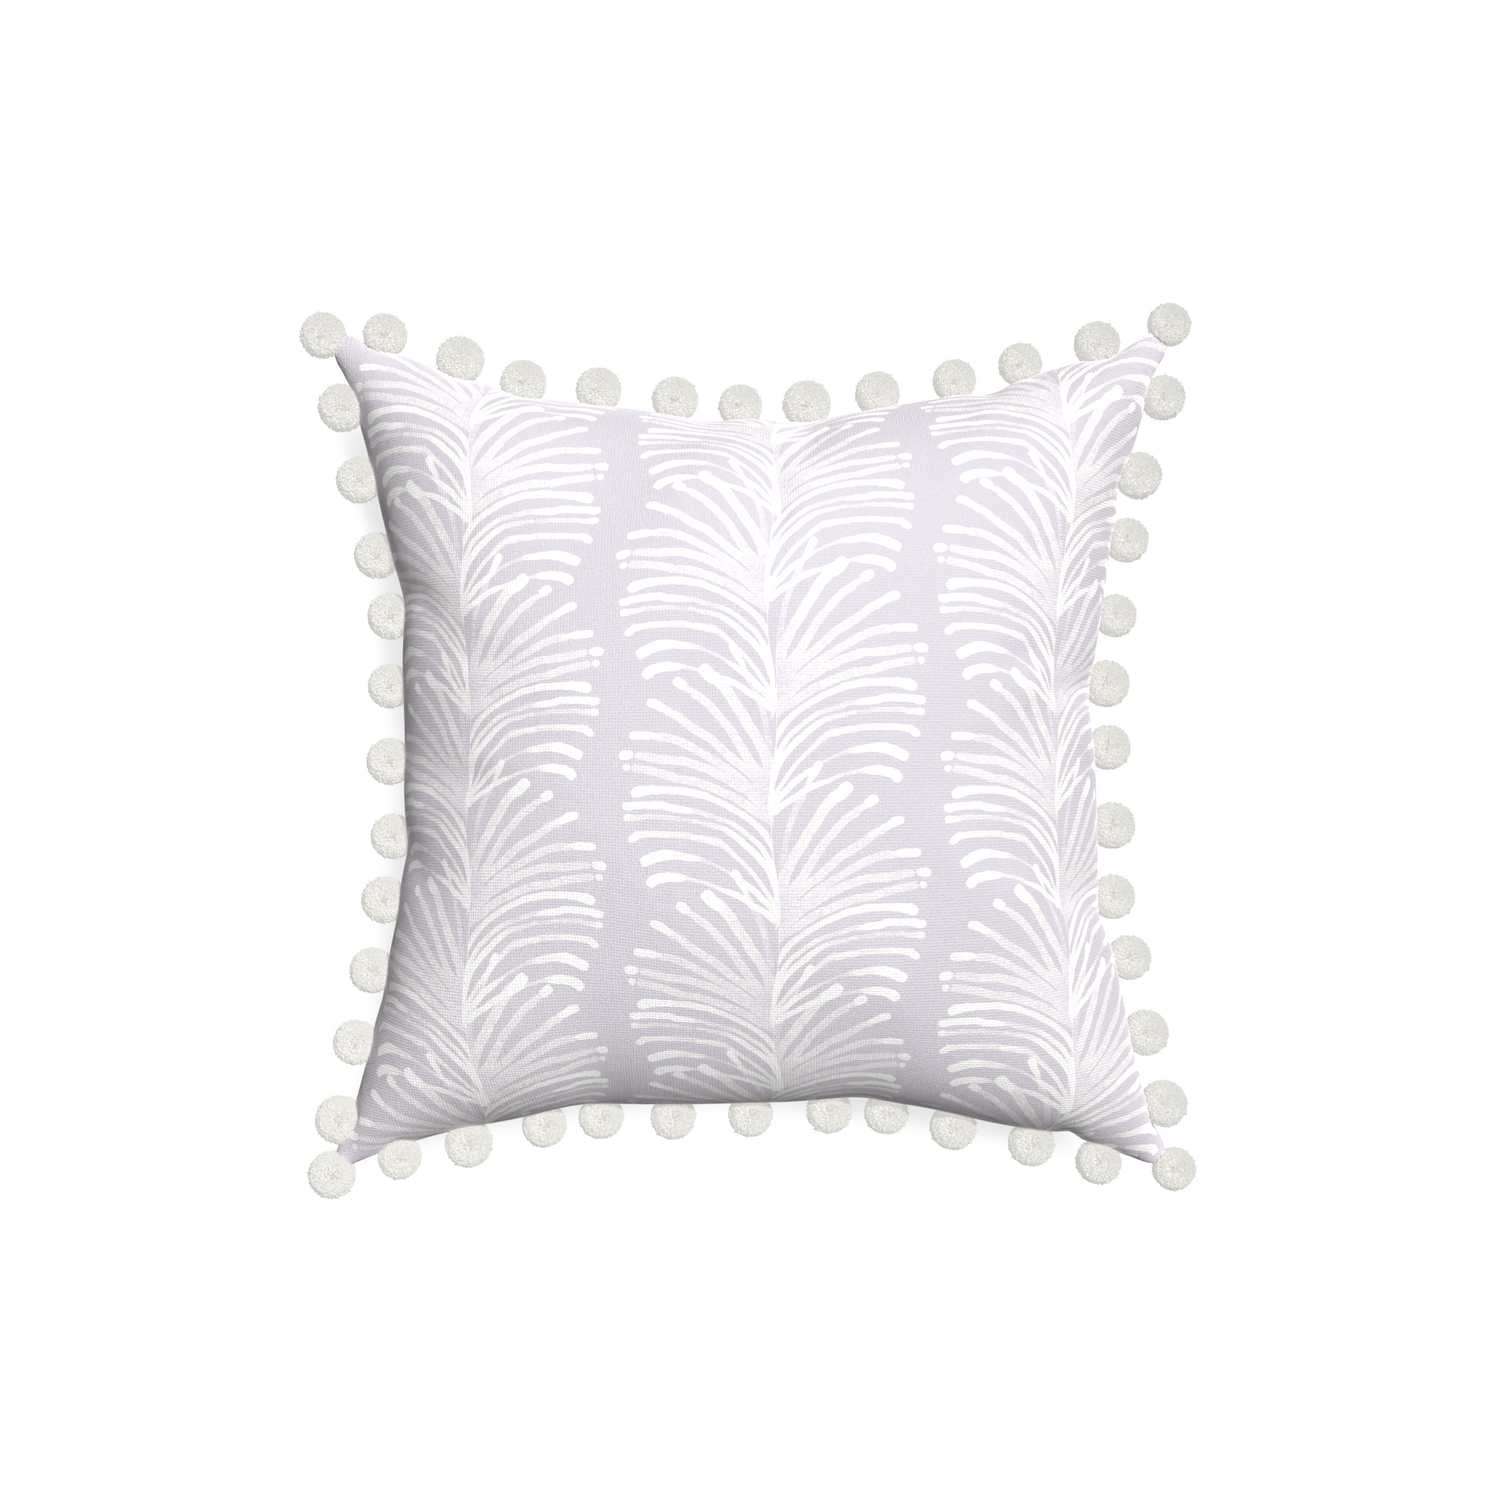 18-square emma lavender custom pillow with snow pom pom on white background